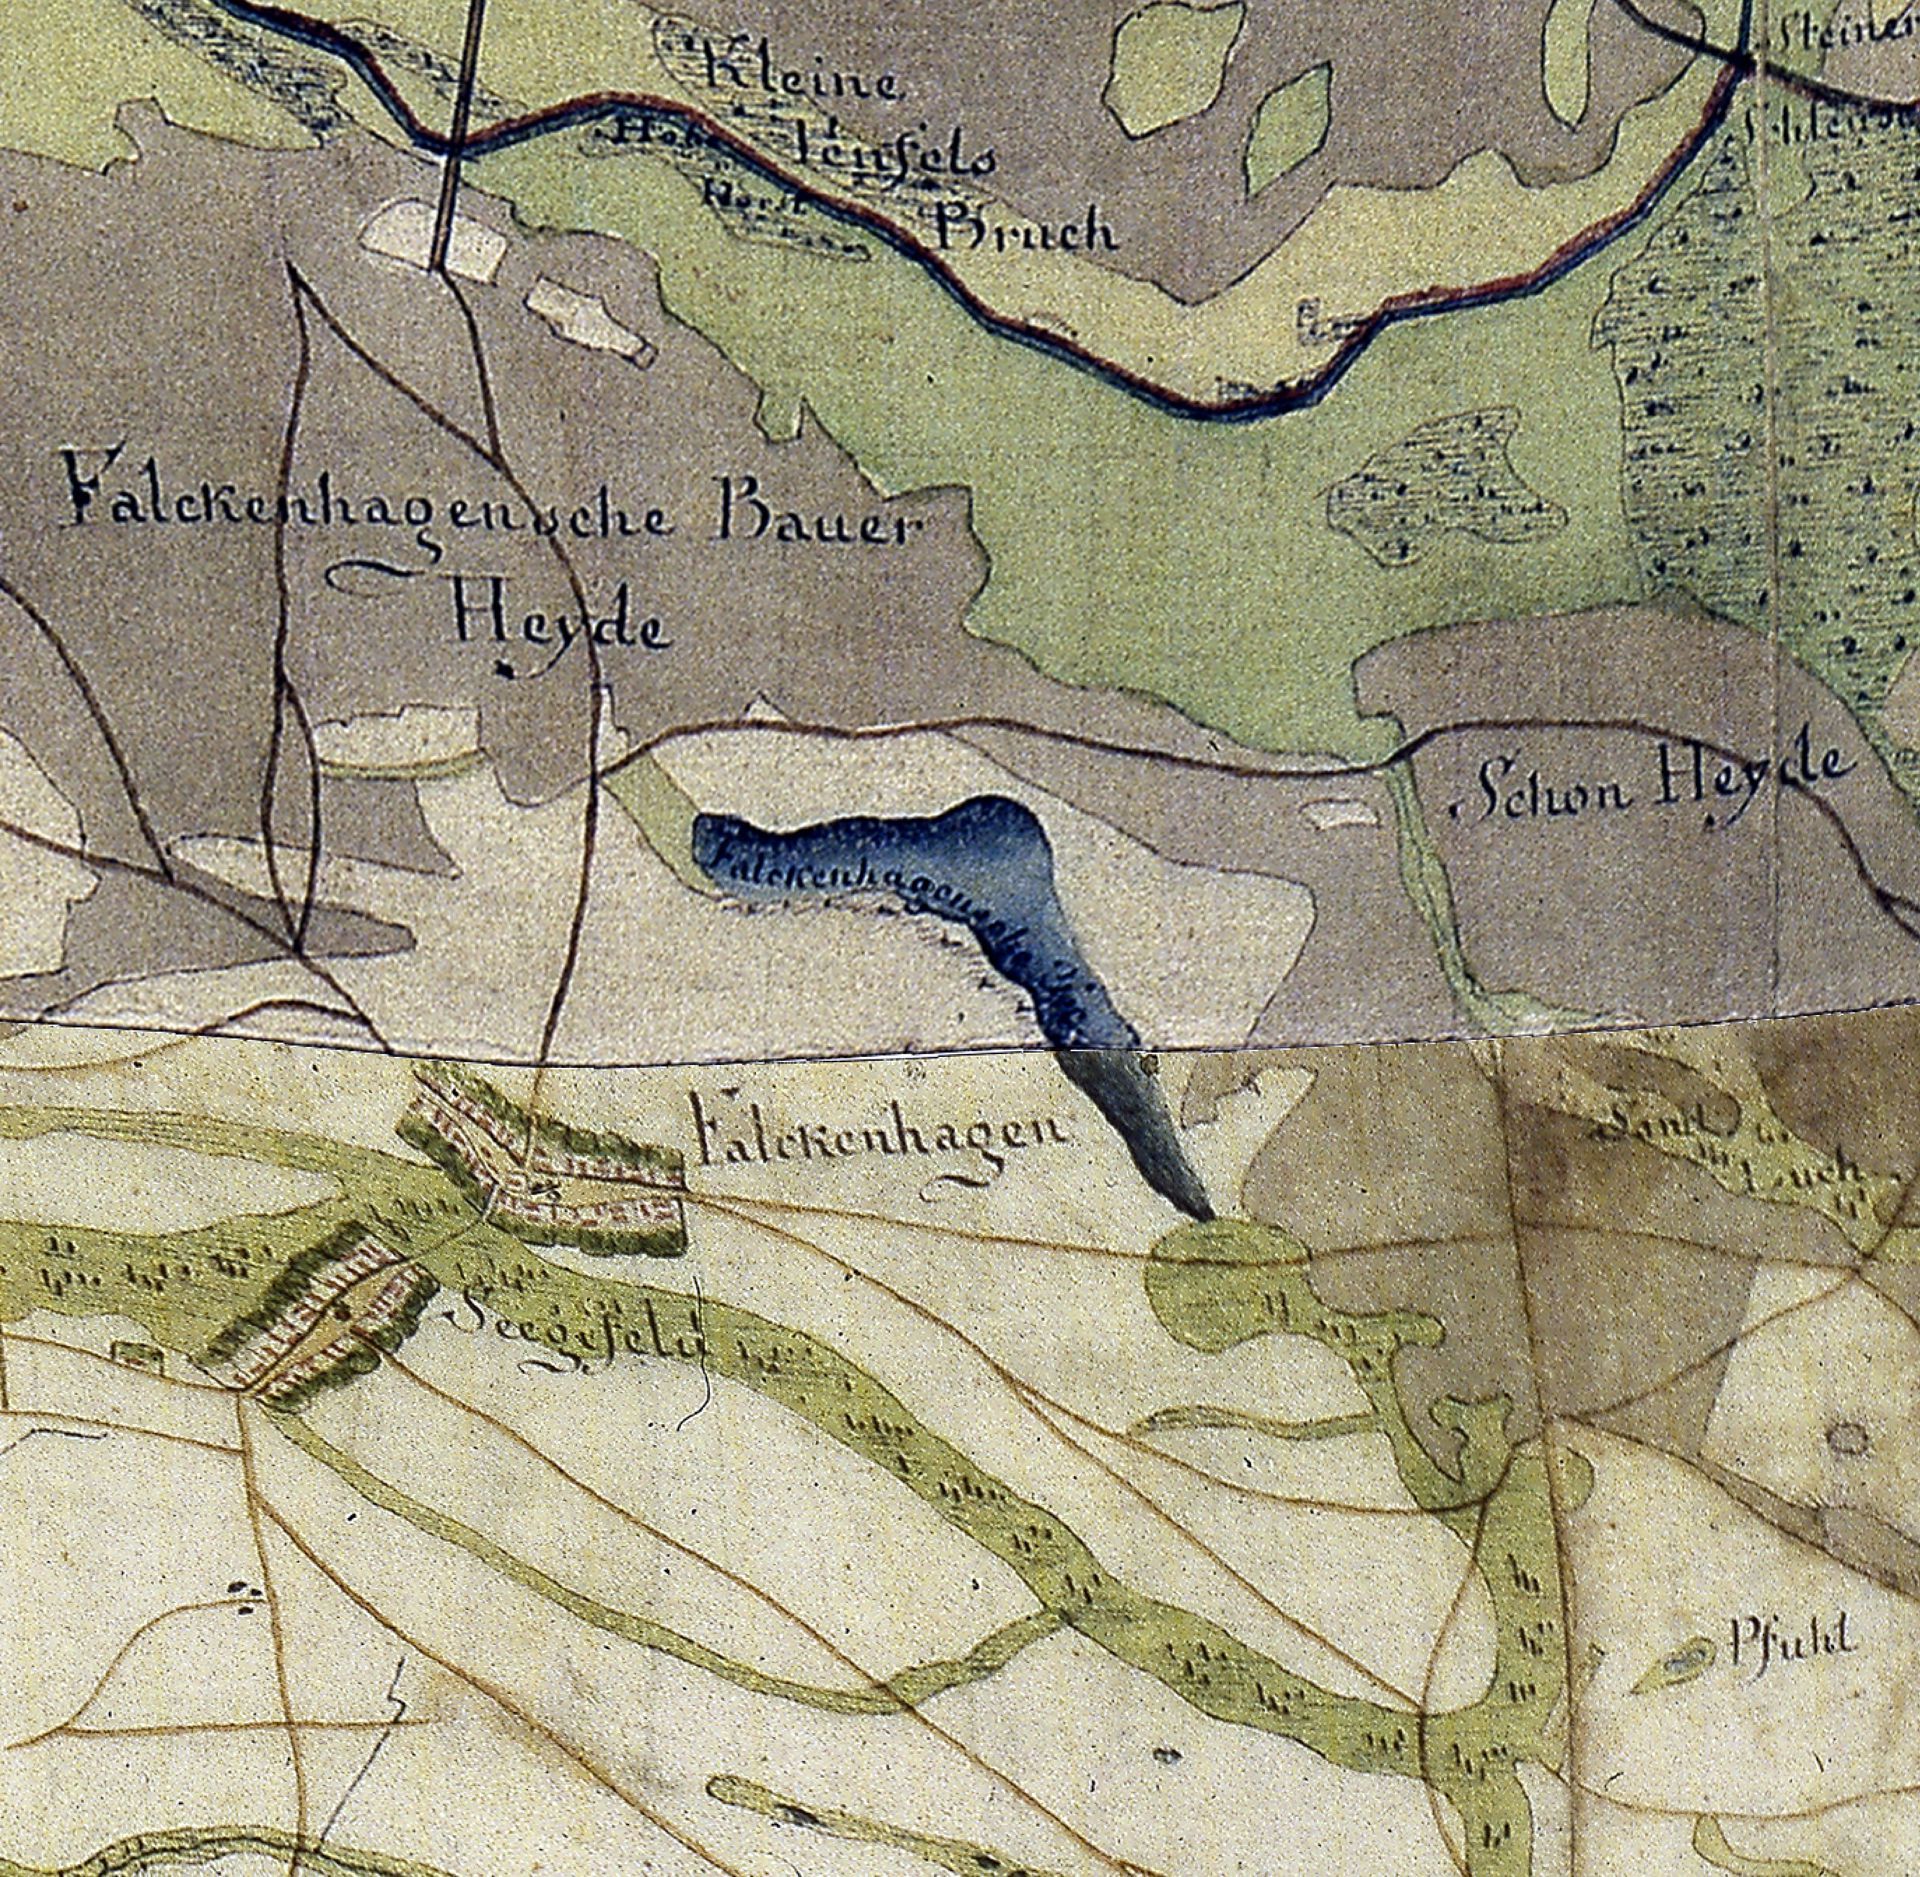 Historischer Plan des Falkenhagener Sees